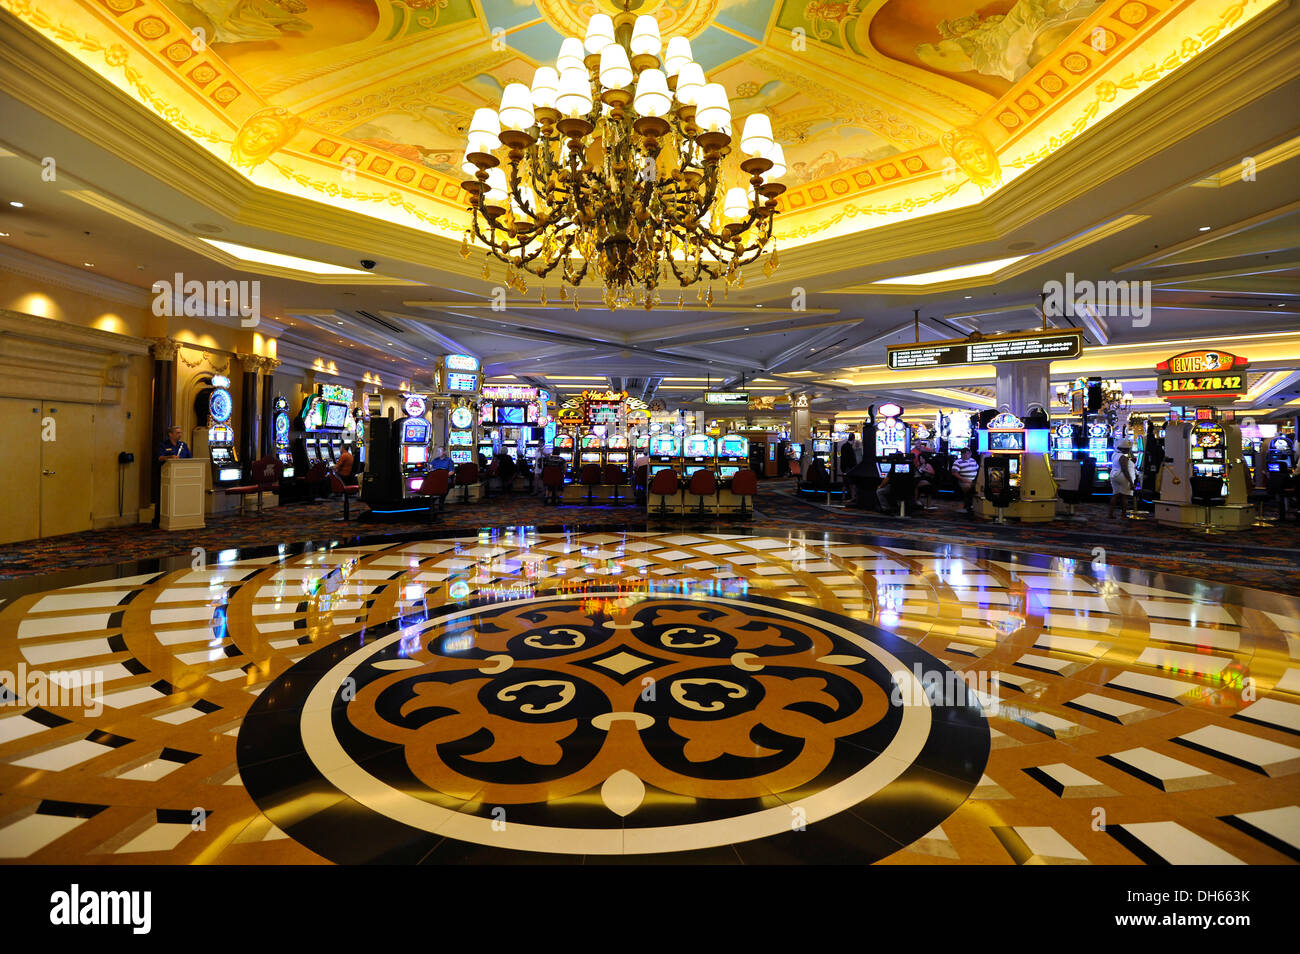 Casino, 5-star luxury hotel, The Venetian Casino, Las Vegas, Nevada, United States Stock Photo